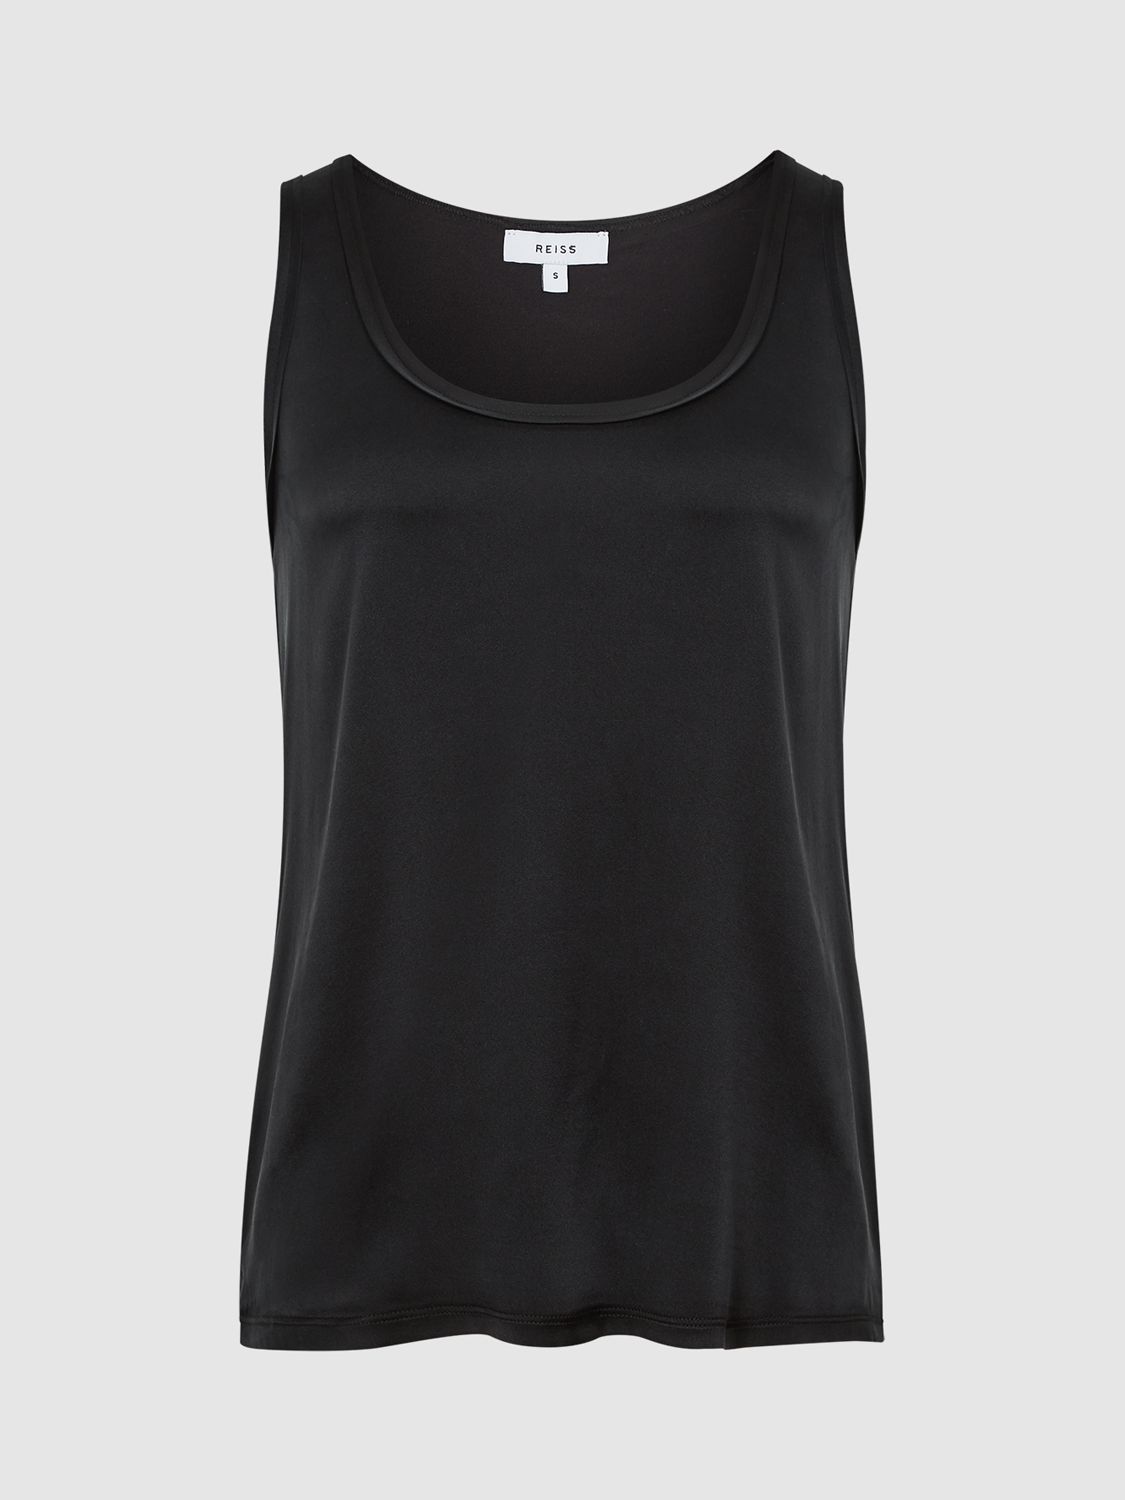 Reiss Riley Silk Front Vest Top, Black, XL